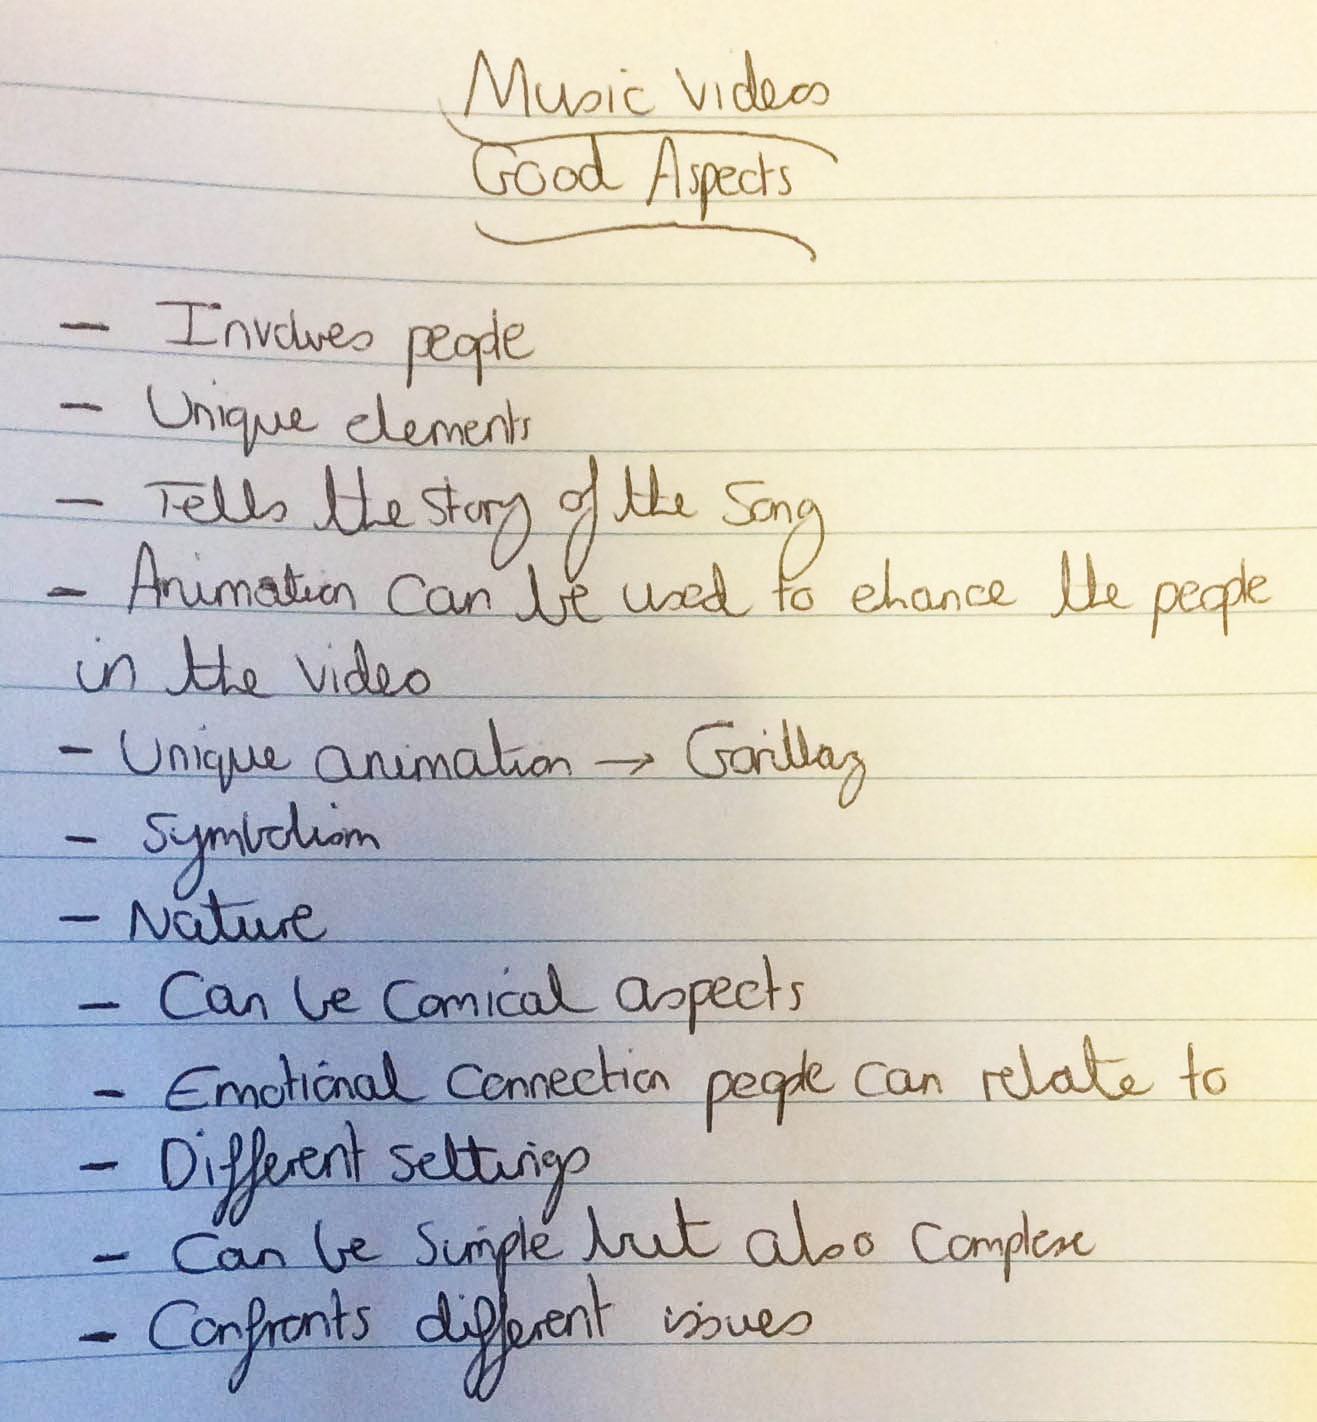 Making Notes Regarding Good Music Video Features